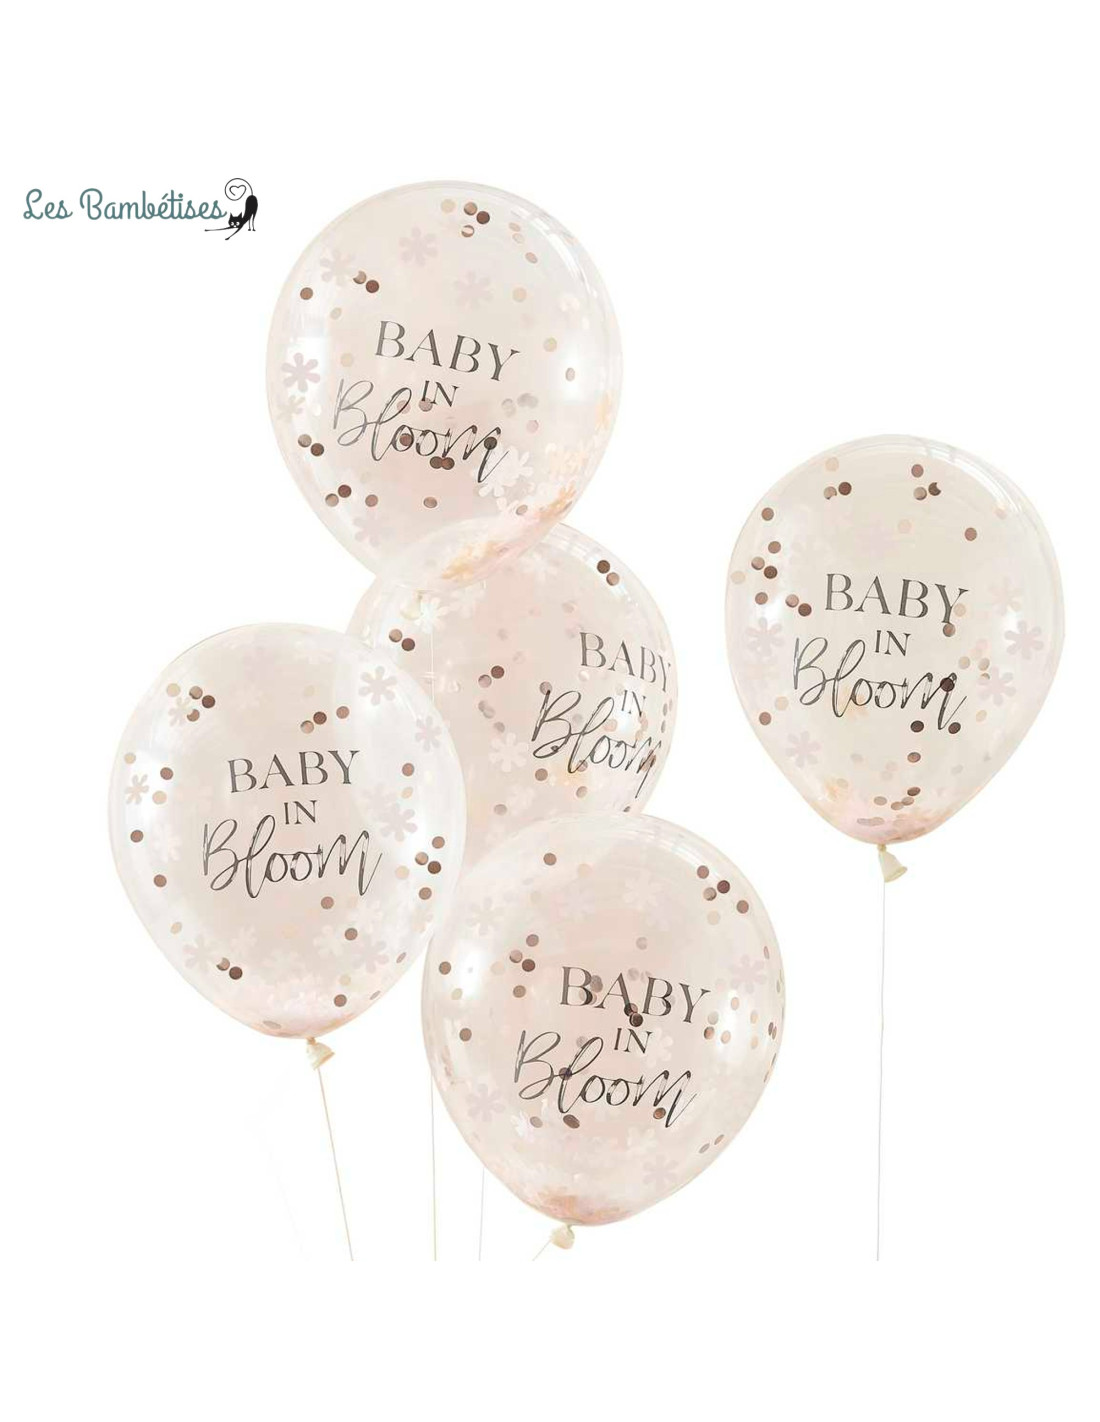 5 Ballons Confettis Fleurs Pastels, Rose Gold - Les Bambetises